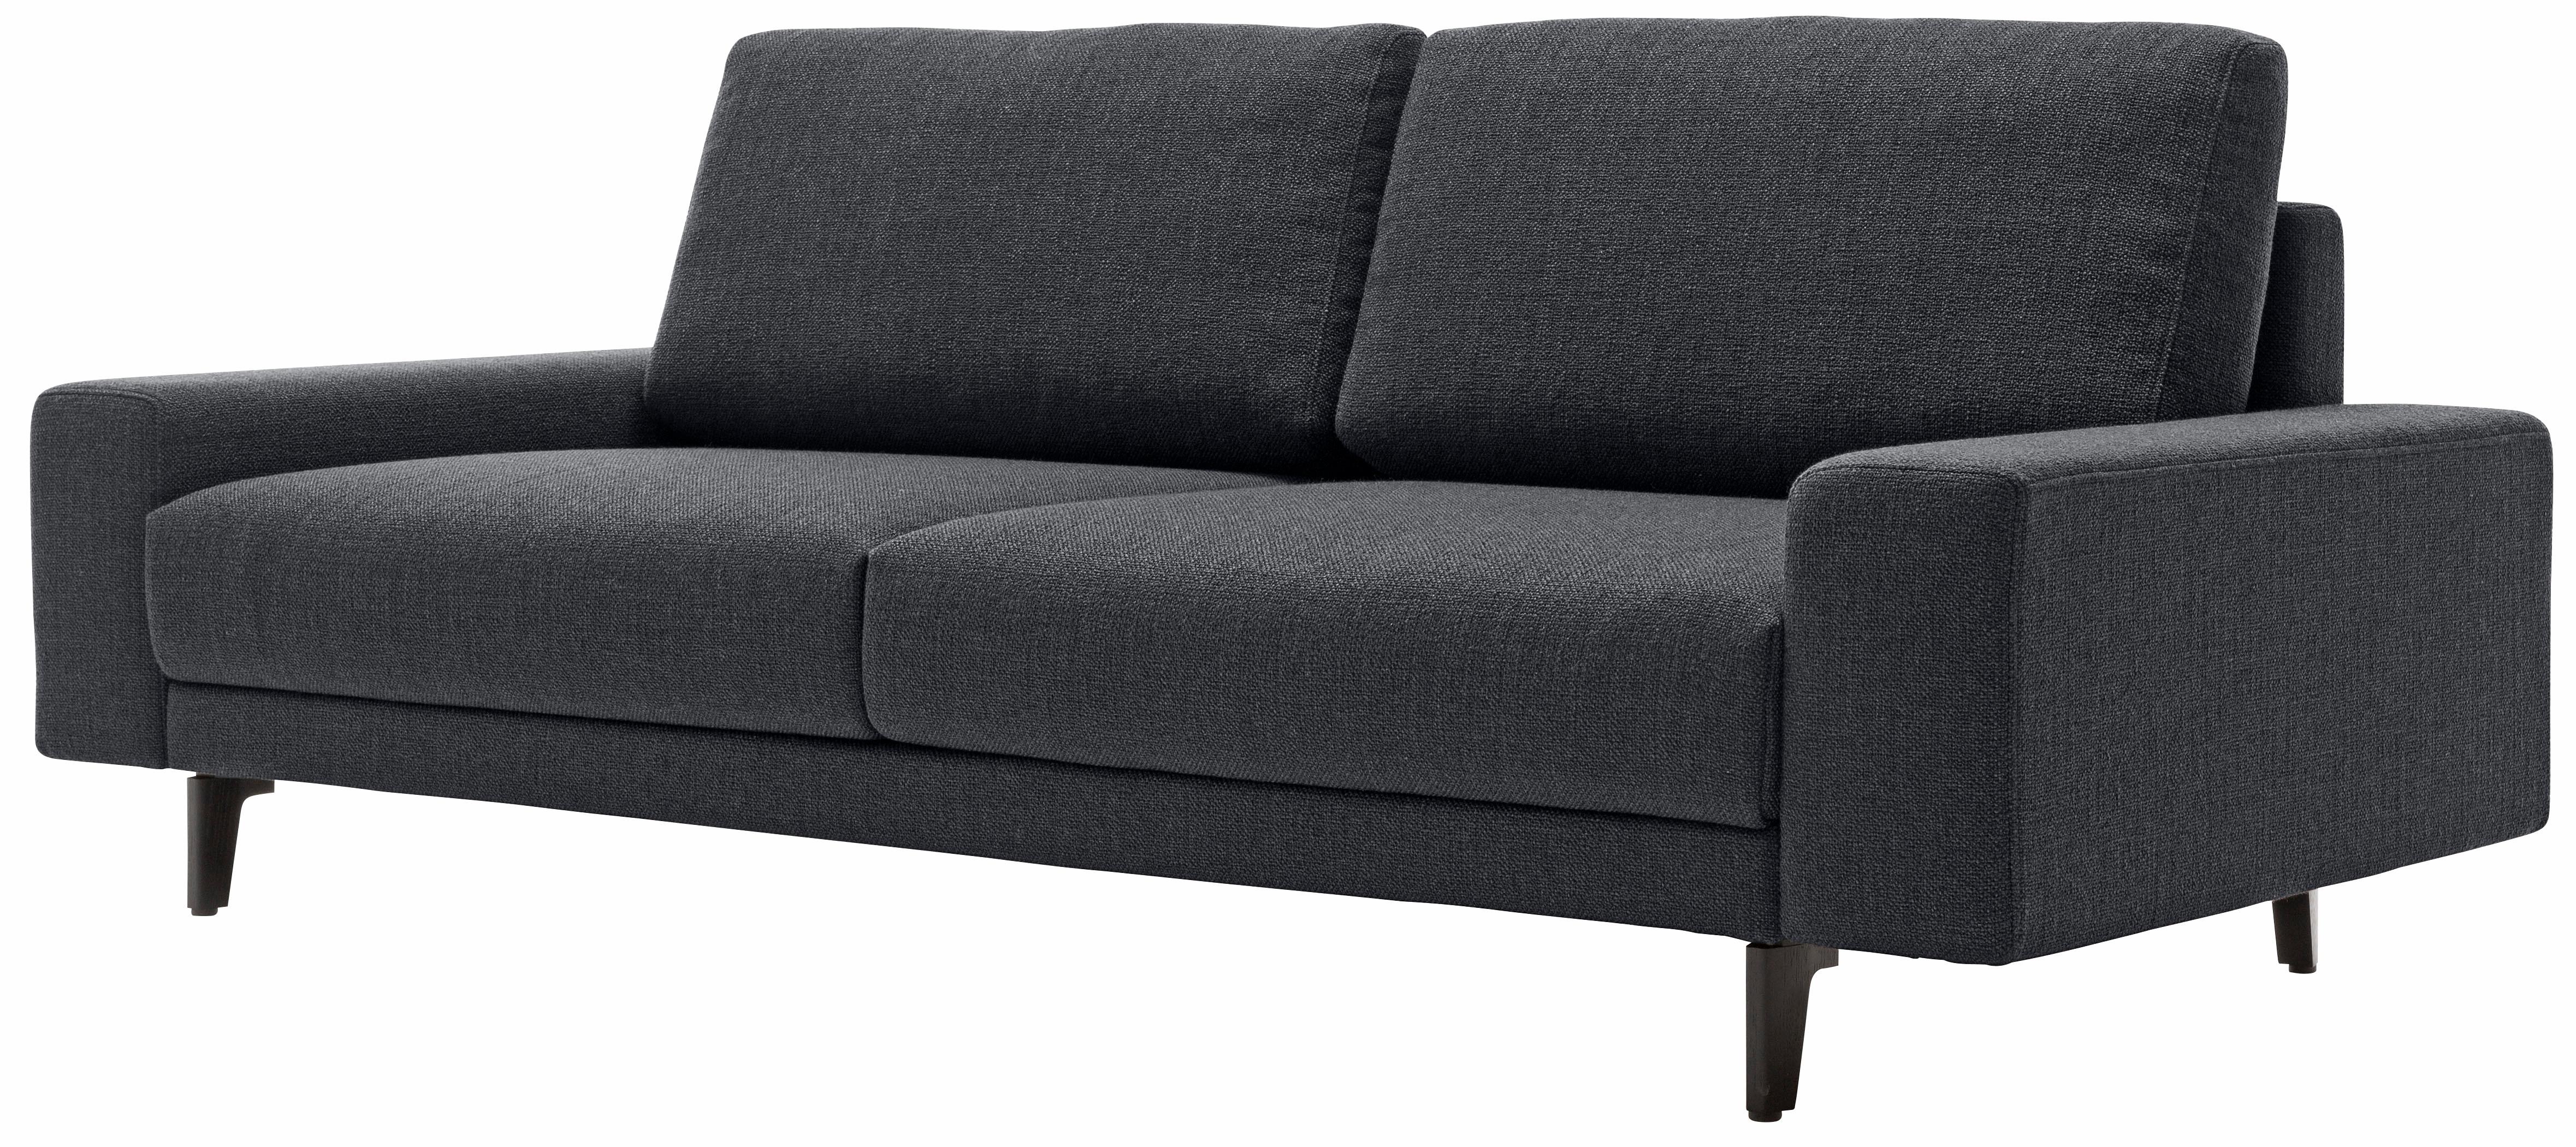 hülsta sofa 2-Sitzer hs.450, Armlehne breit niedrig, Breite 180 cm, Alugussfuß Umbragrau, wahlweise in Stoff oder Leder